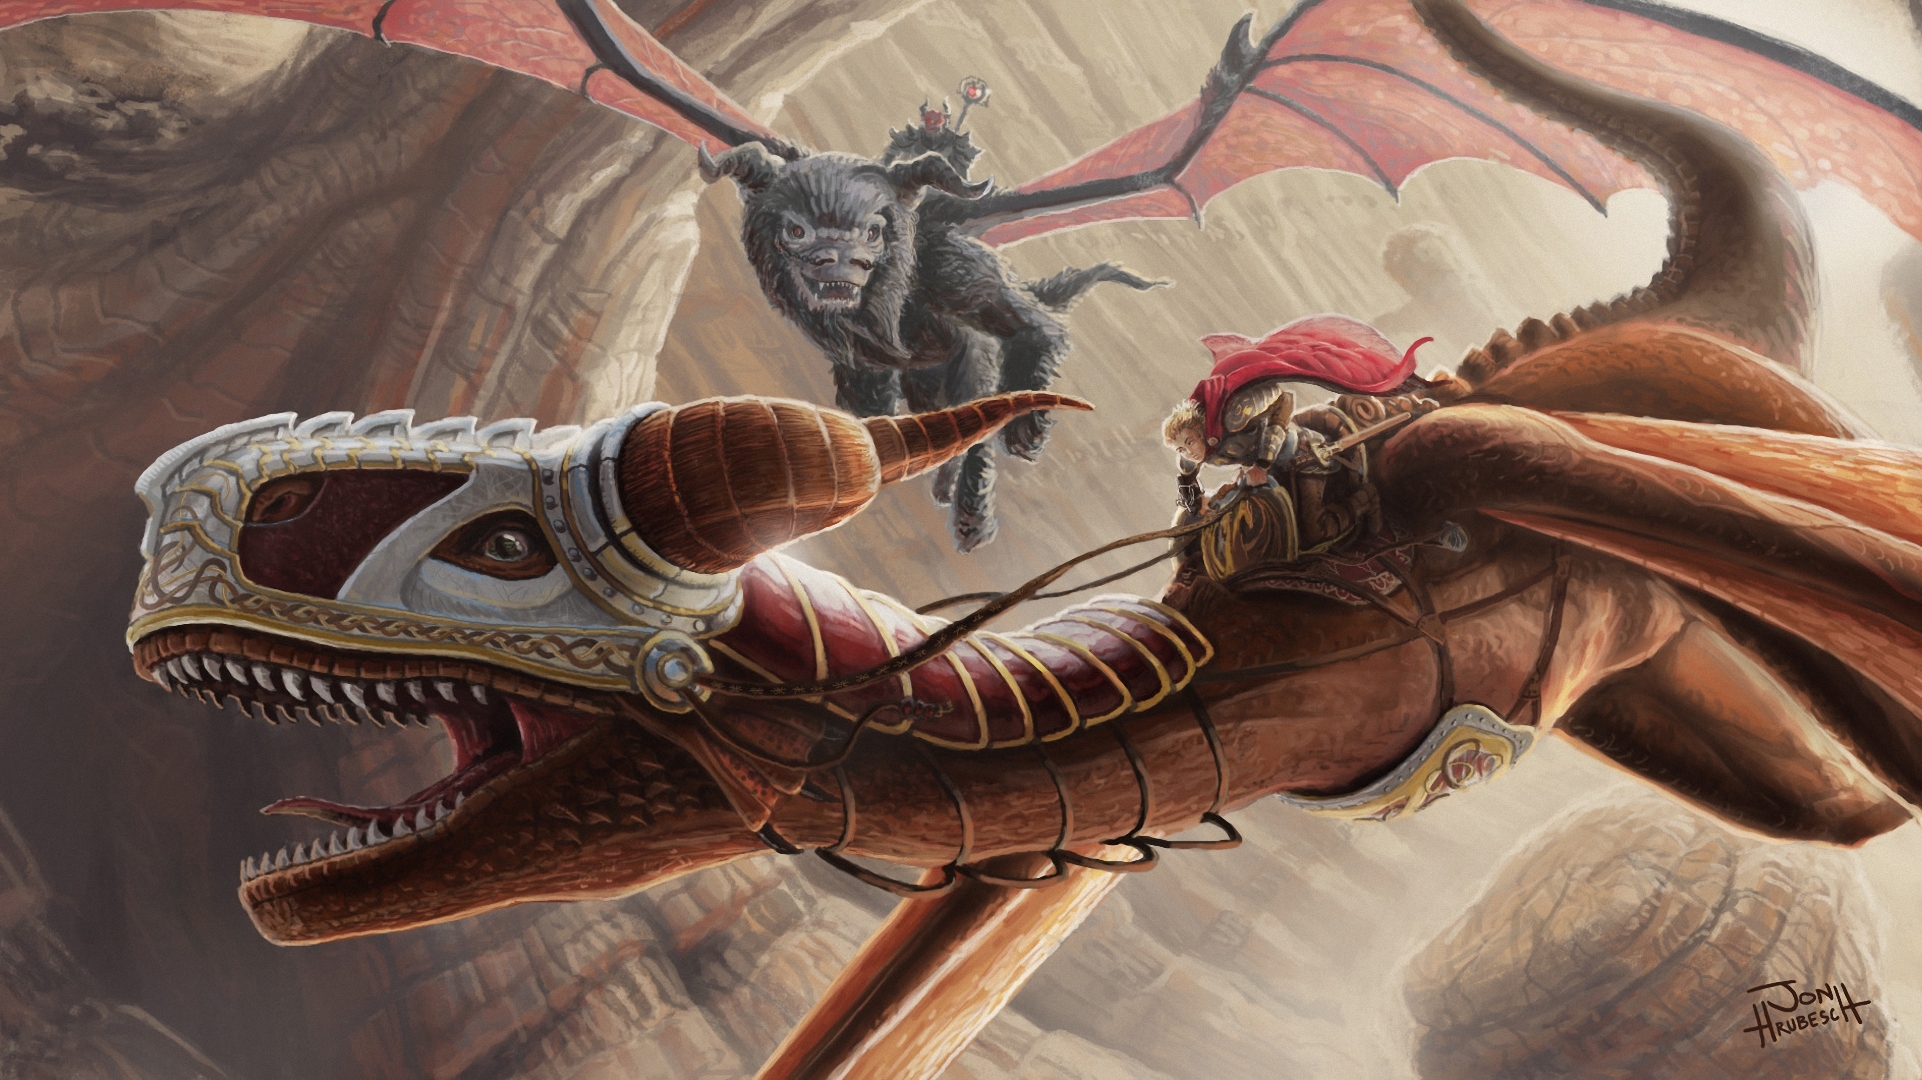 demon riding dragon